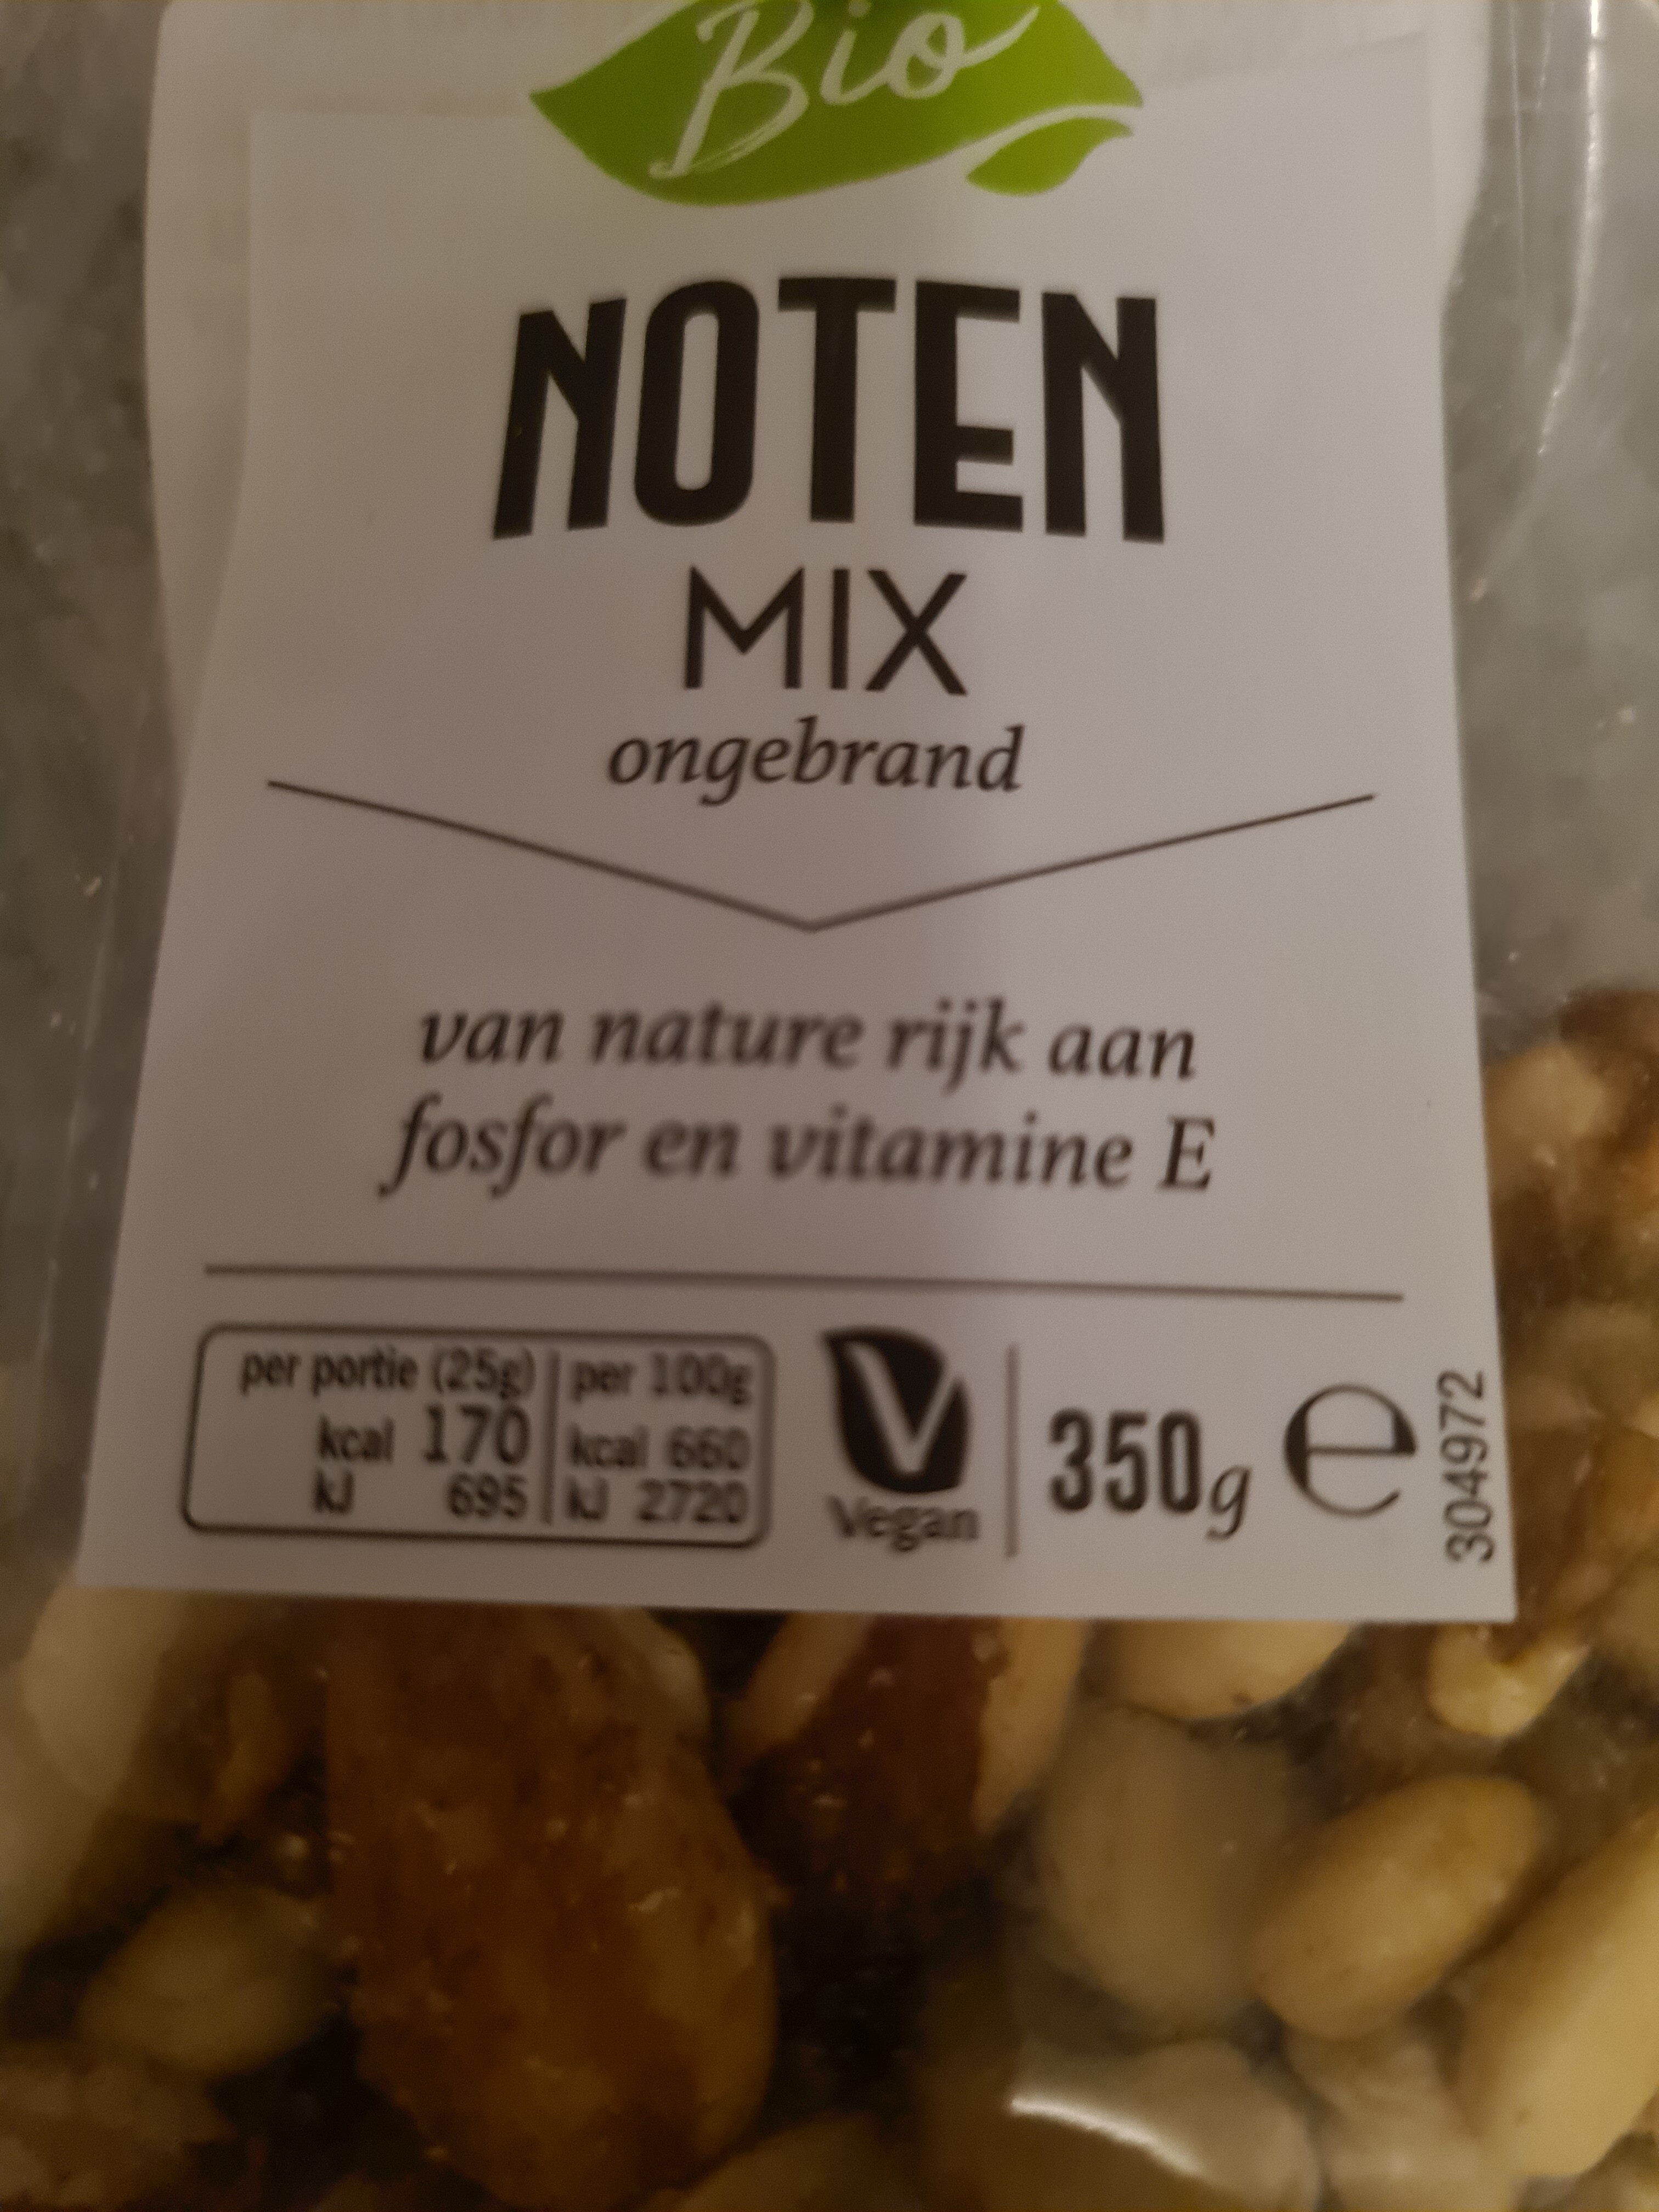 noten mix - Product